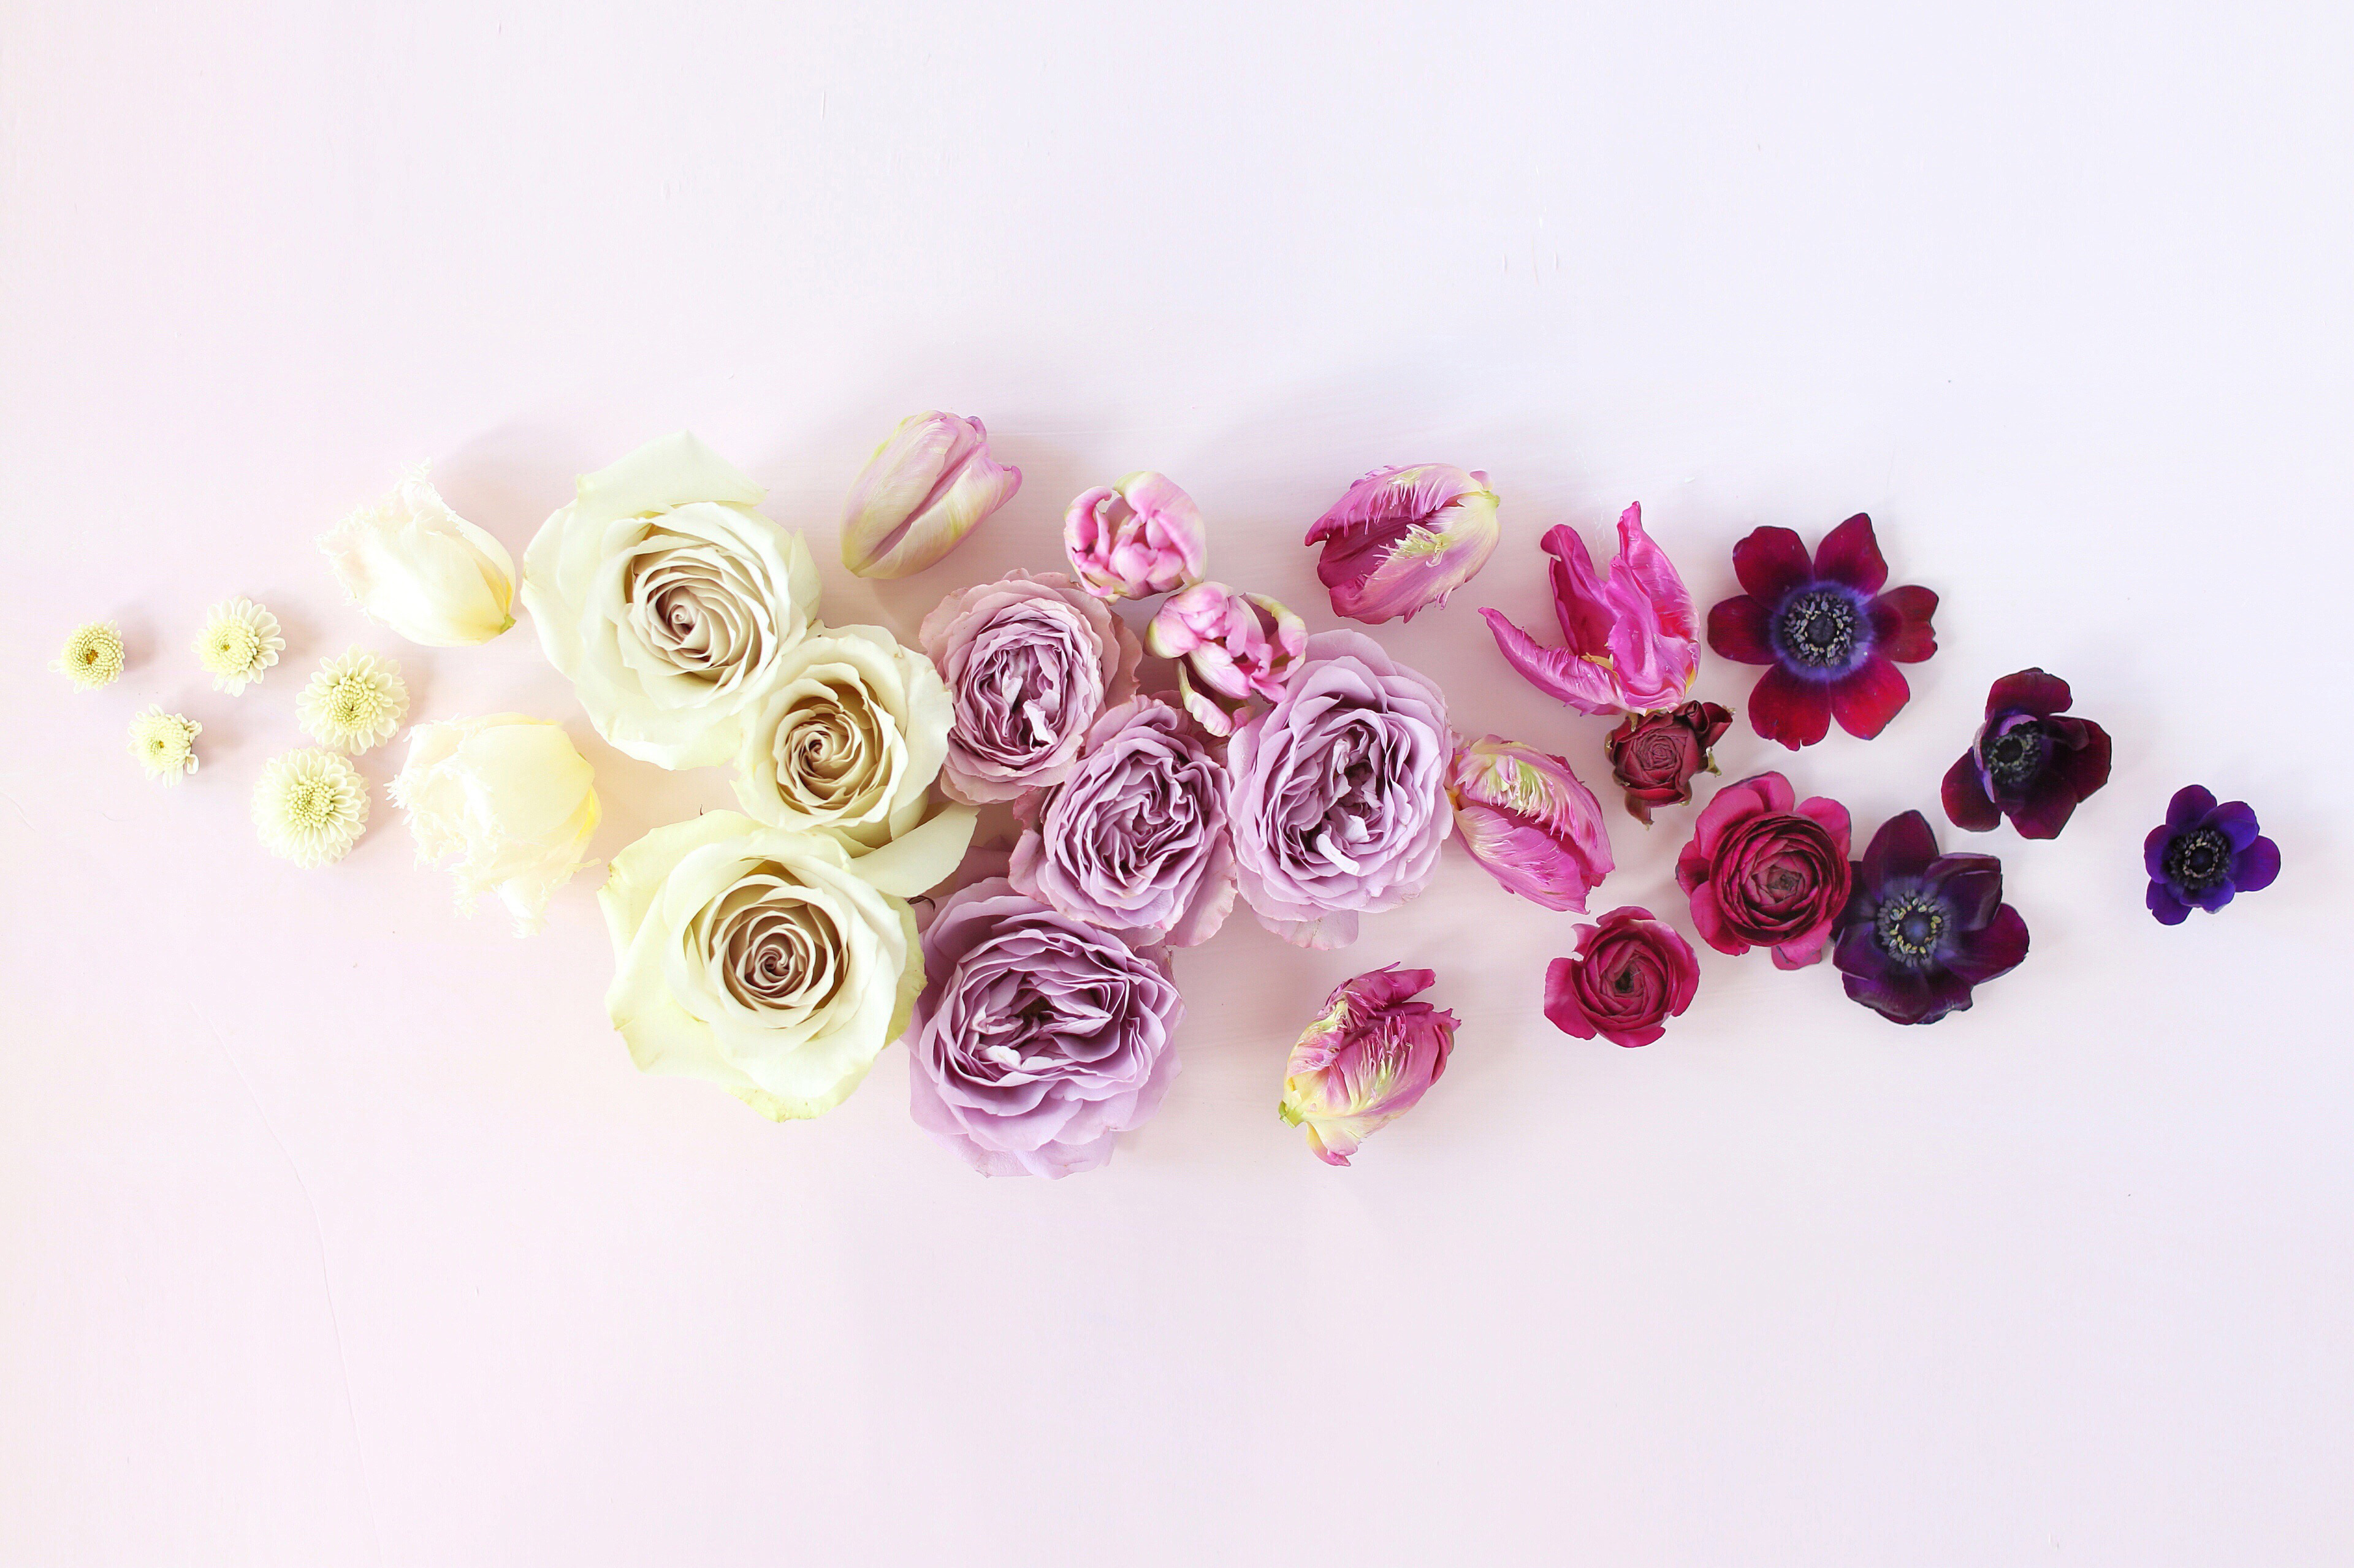 Digital Blooms April 2018 | Free Pantone Inspired Desktop Wallpapers for Spring | Free Ombre Lavender Floral Tech Wallpapers | Design 1 // JustineCelina.com x Rebecca Dawn Design